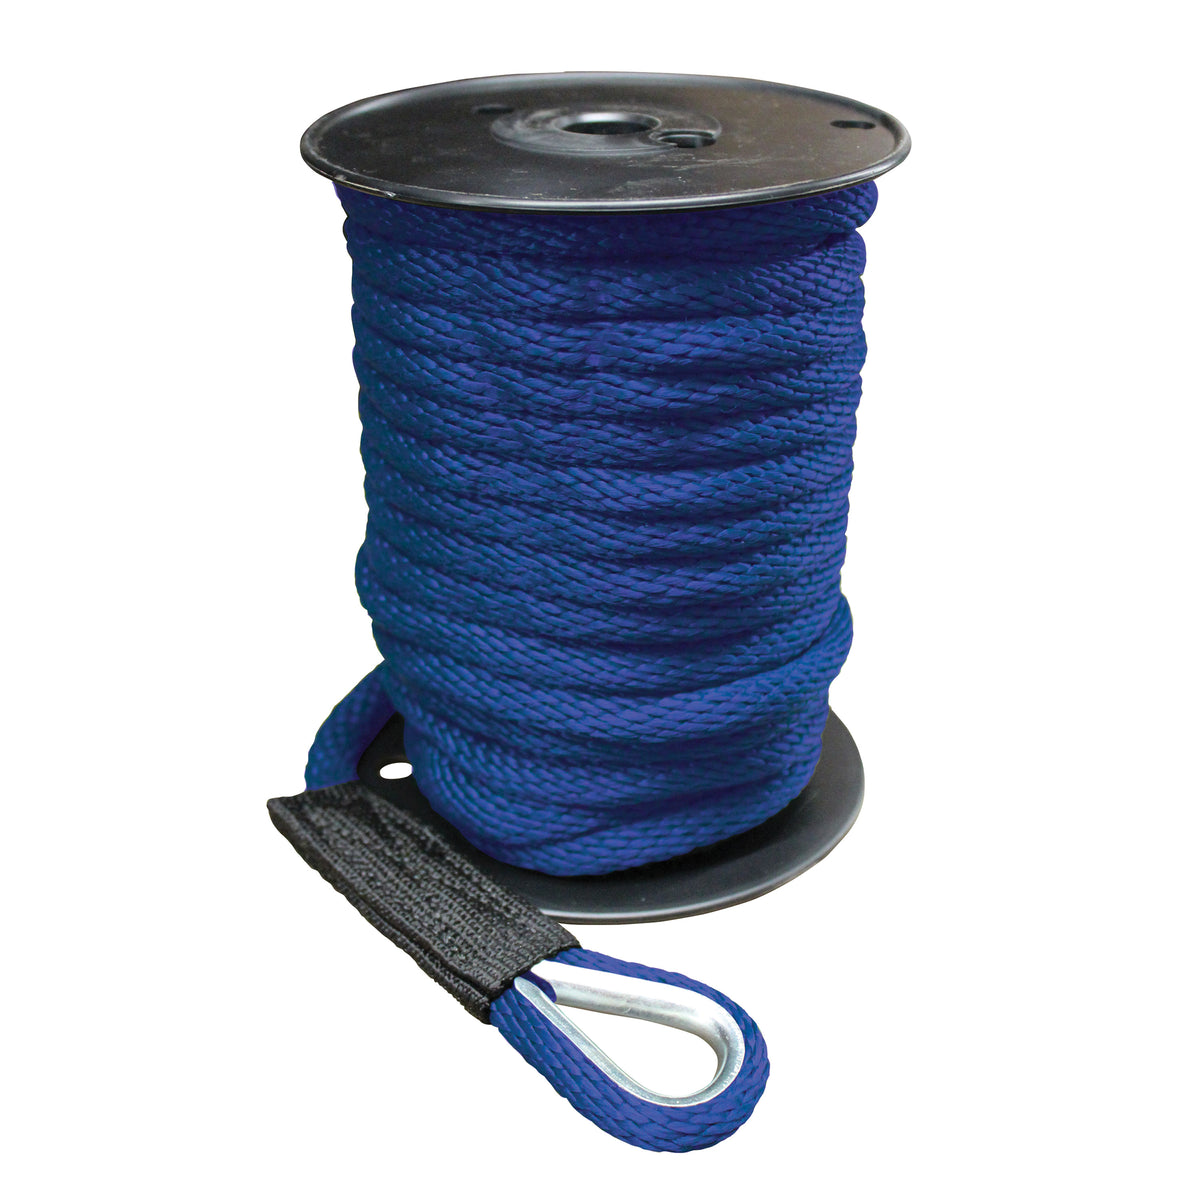 Regal Connection Solid Braid Polypropylene Anchor Line, 3/8" x 50' - Blue 300538-08